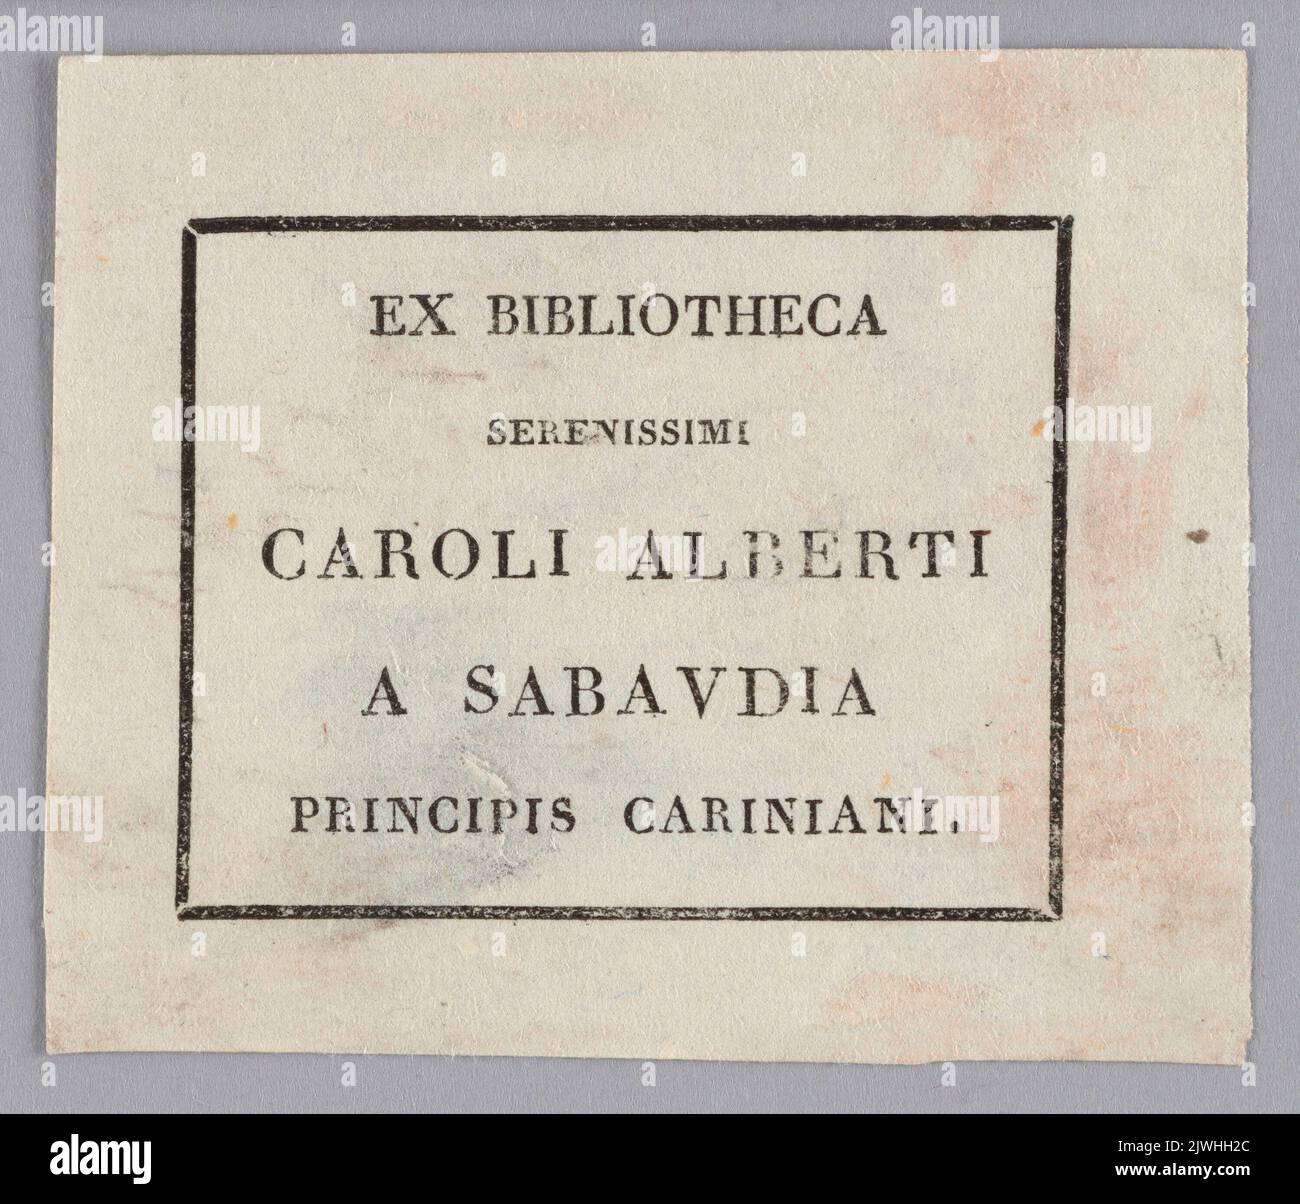 Ex Bibliotheca Serenissimi Caroli Alberti a Sabaudia Principis Cariniani. Unbekannt, Drucker Stockfoto